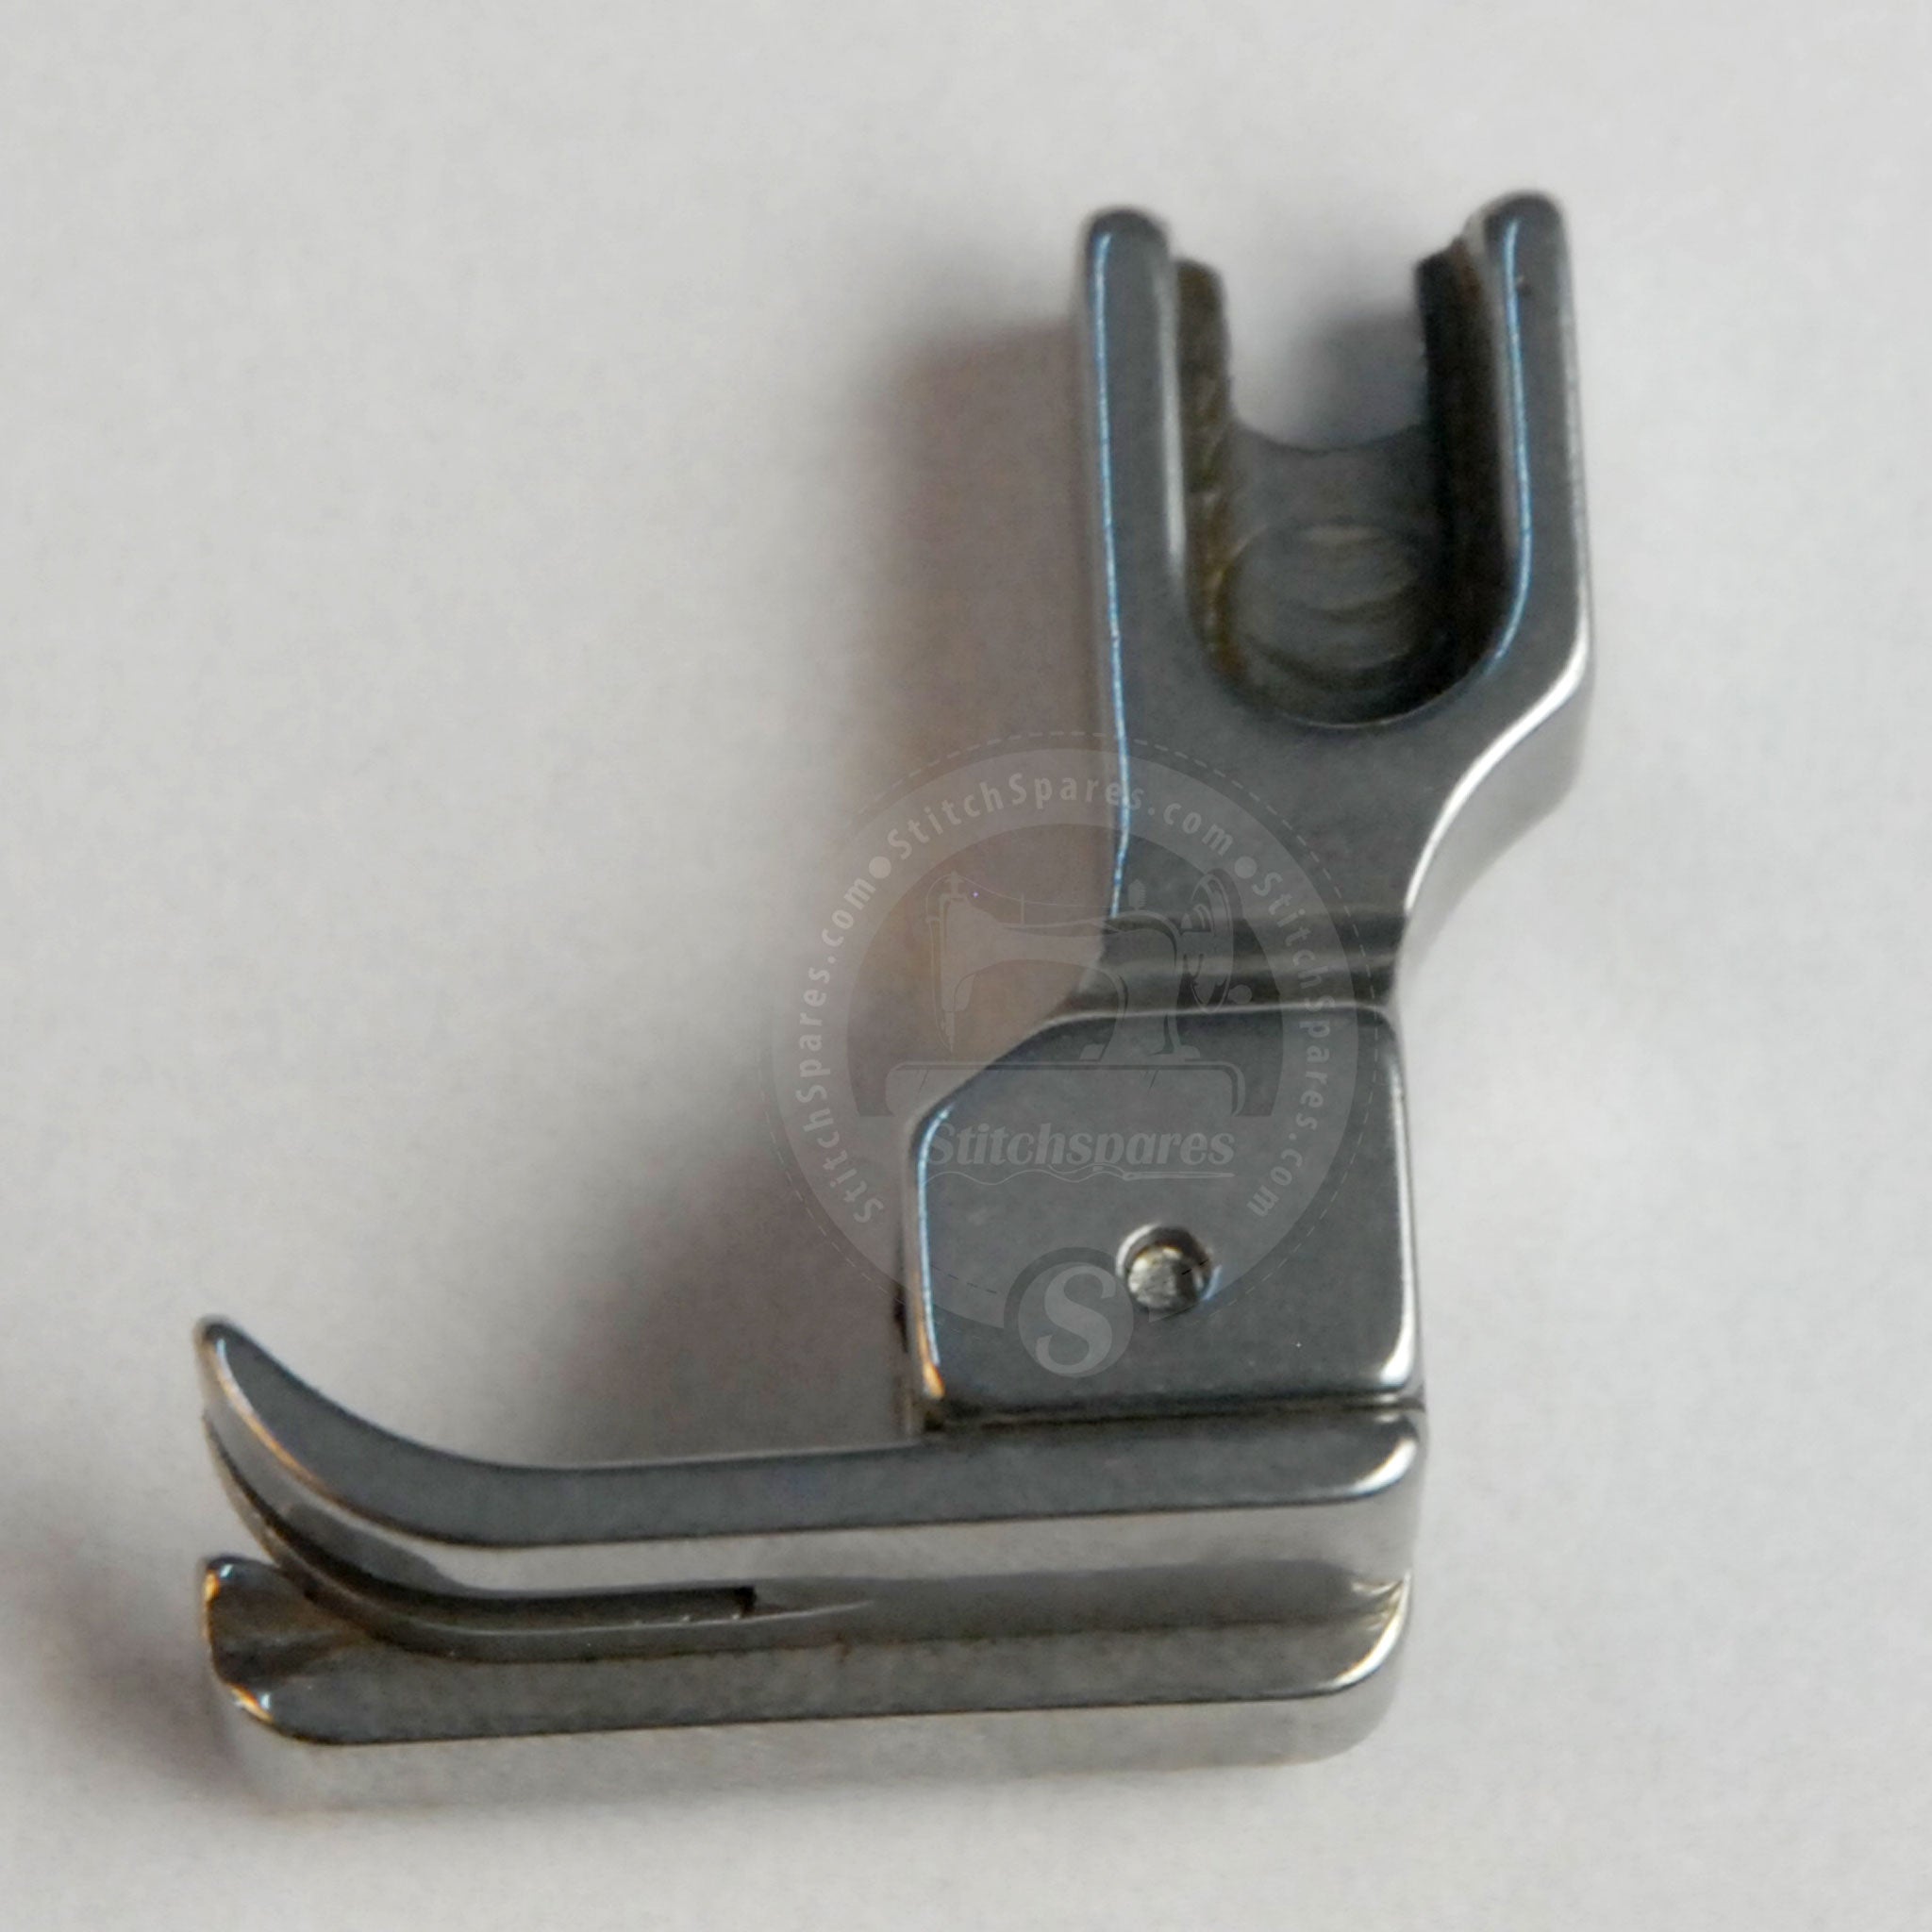 cl 1/8e Presser Foot Single Needle lock-stitch machine – StitchSpares.Com